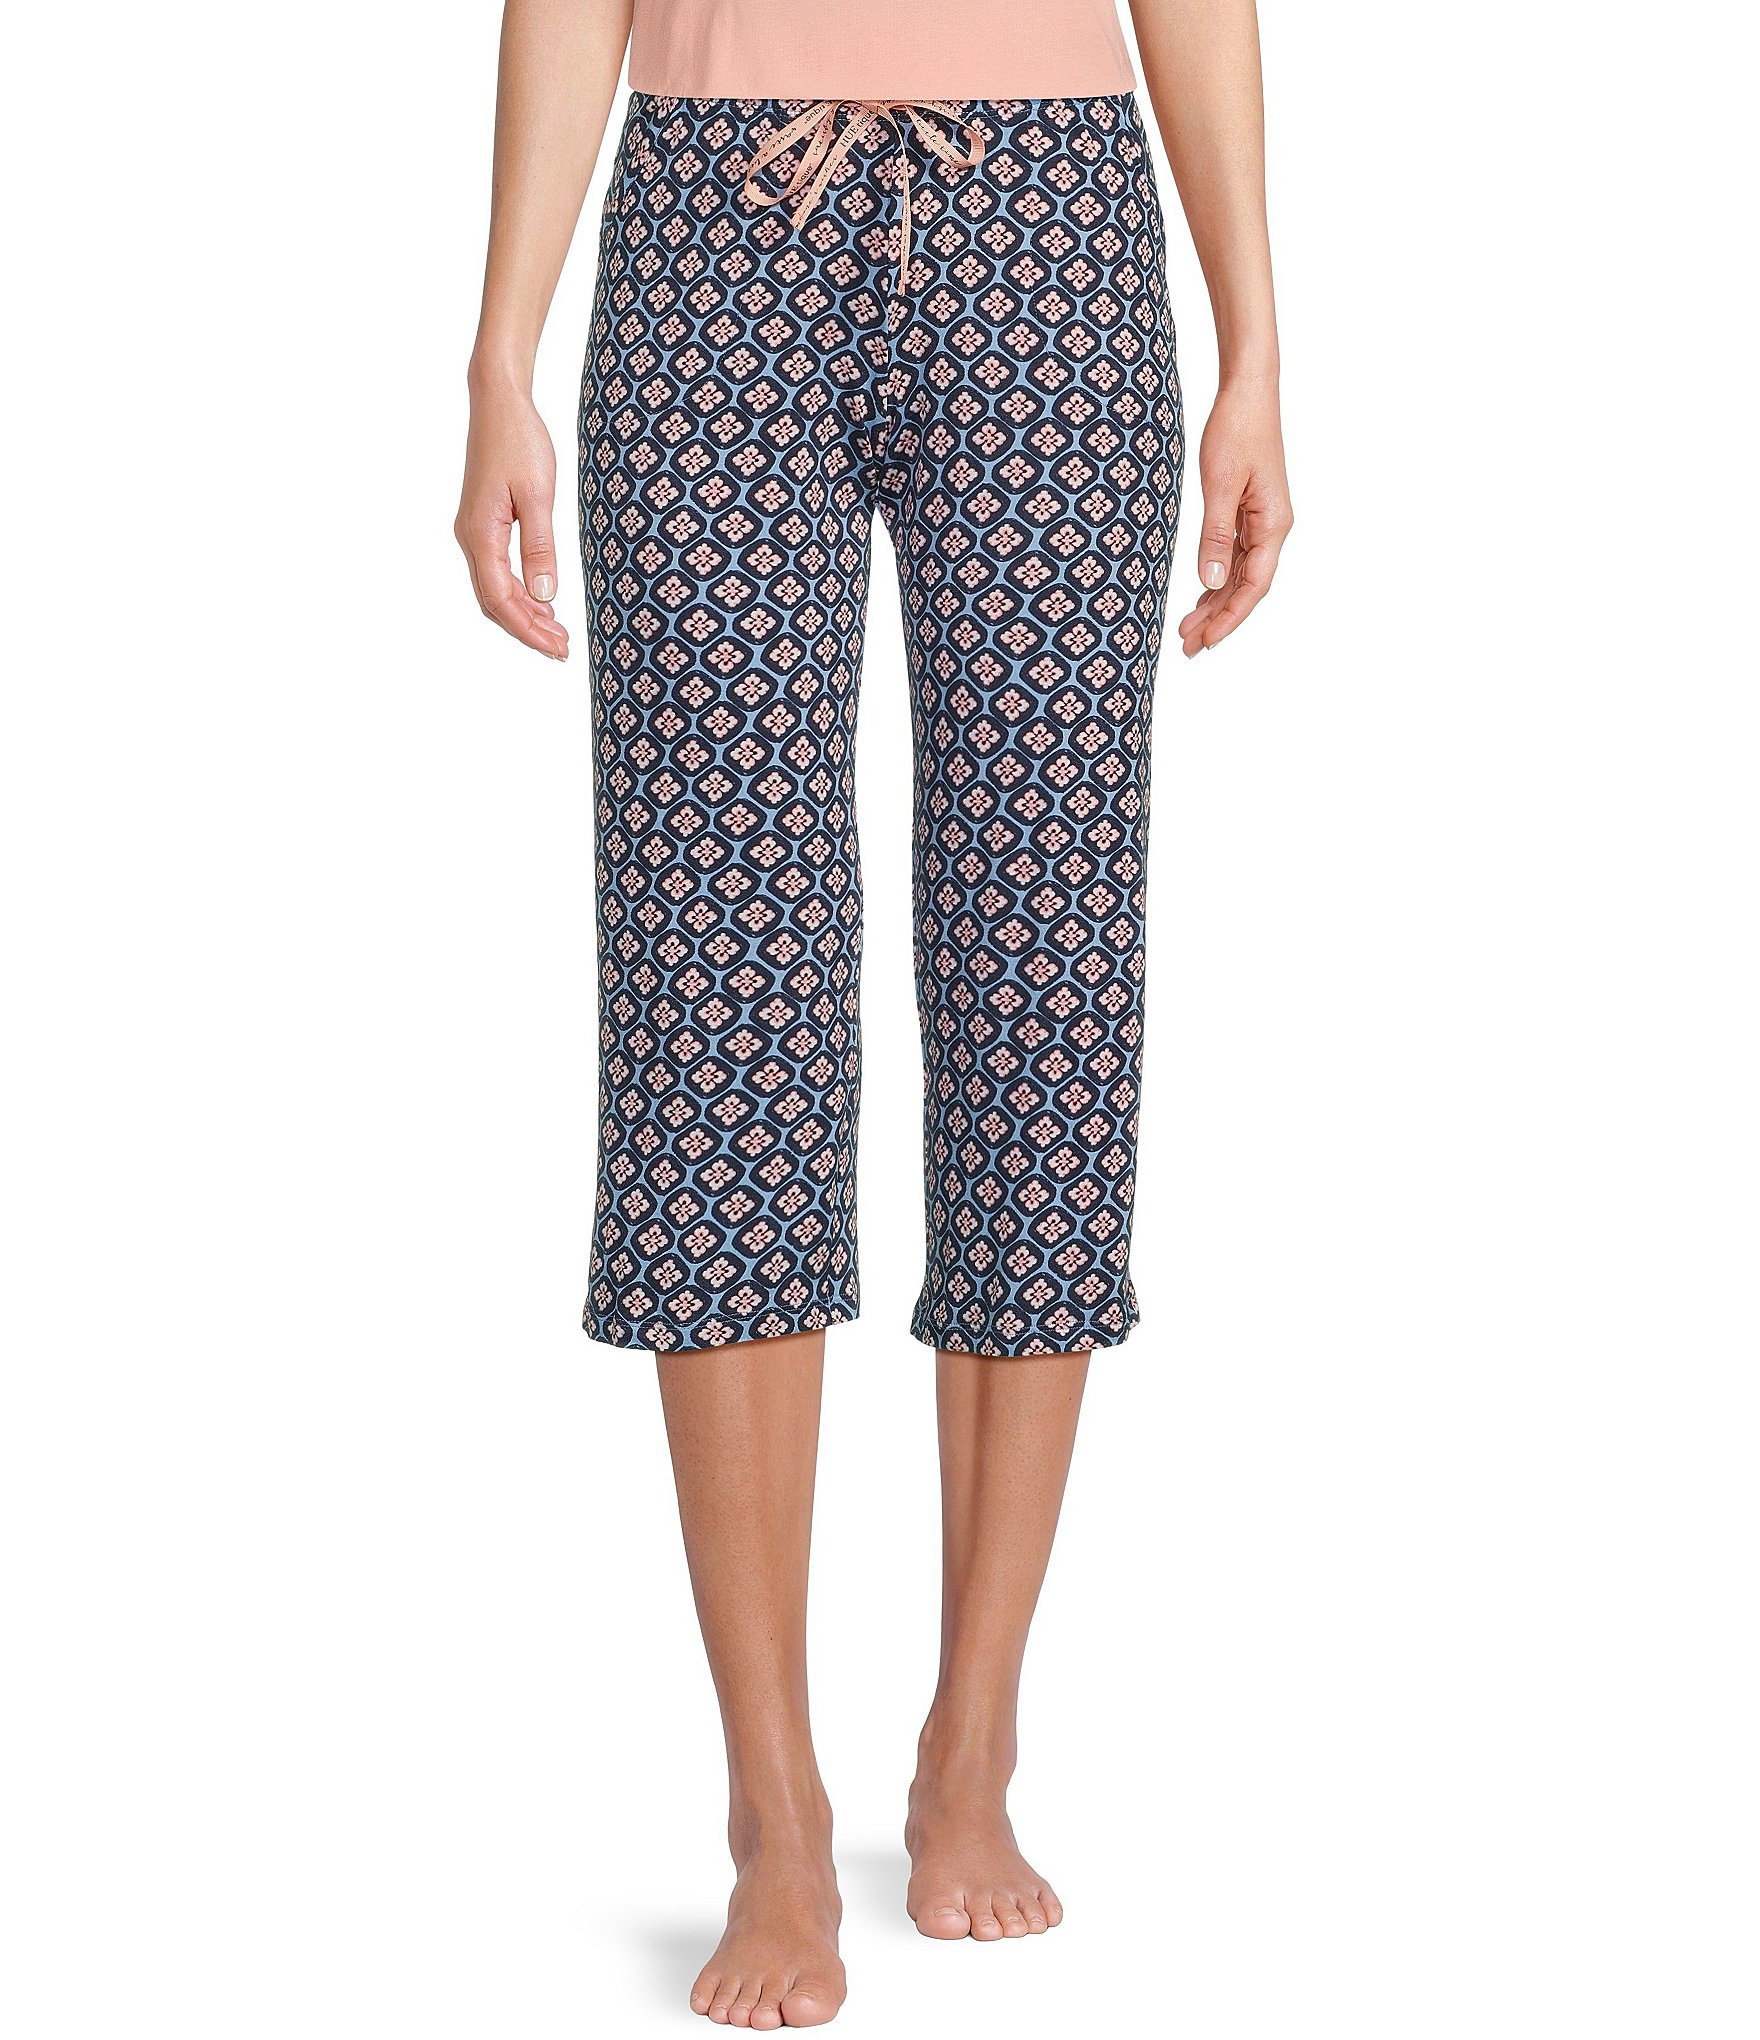 skimmers: Women's Pajama & Sleep Pants